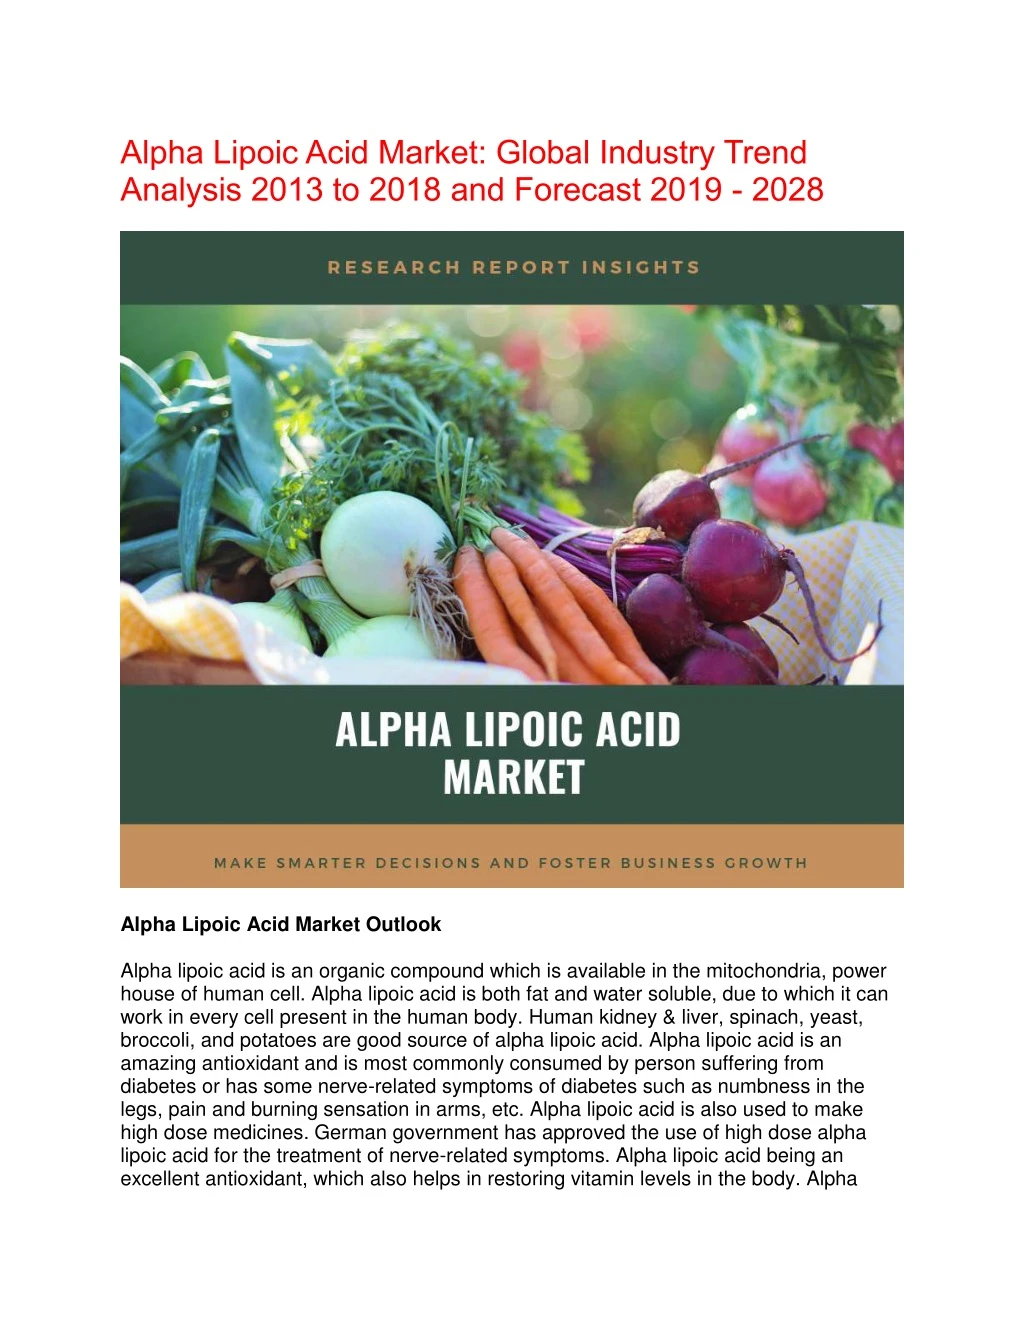 alpha lipoic acid market global industry trend